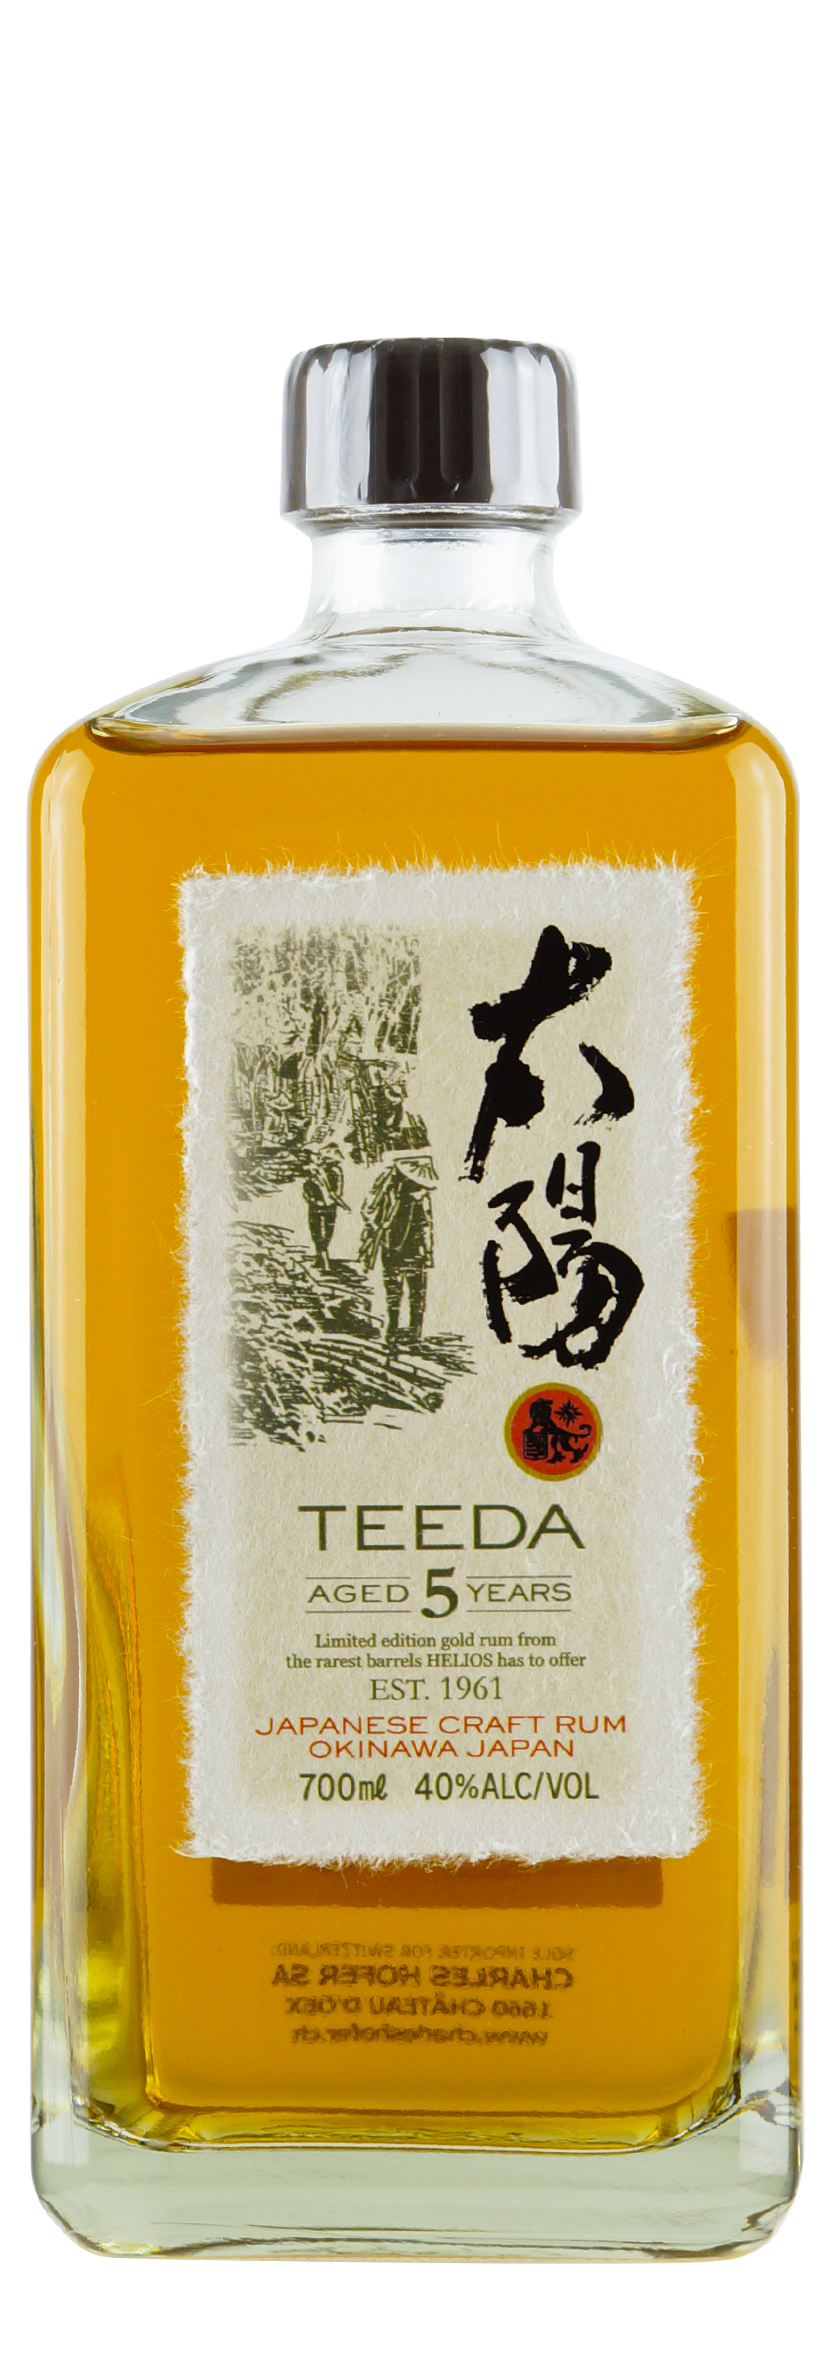 Teeda aged 5 years Okinawa Craft Rum 0